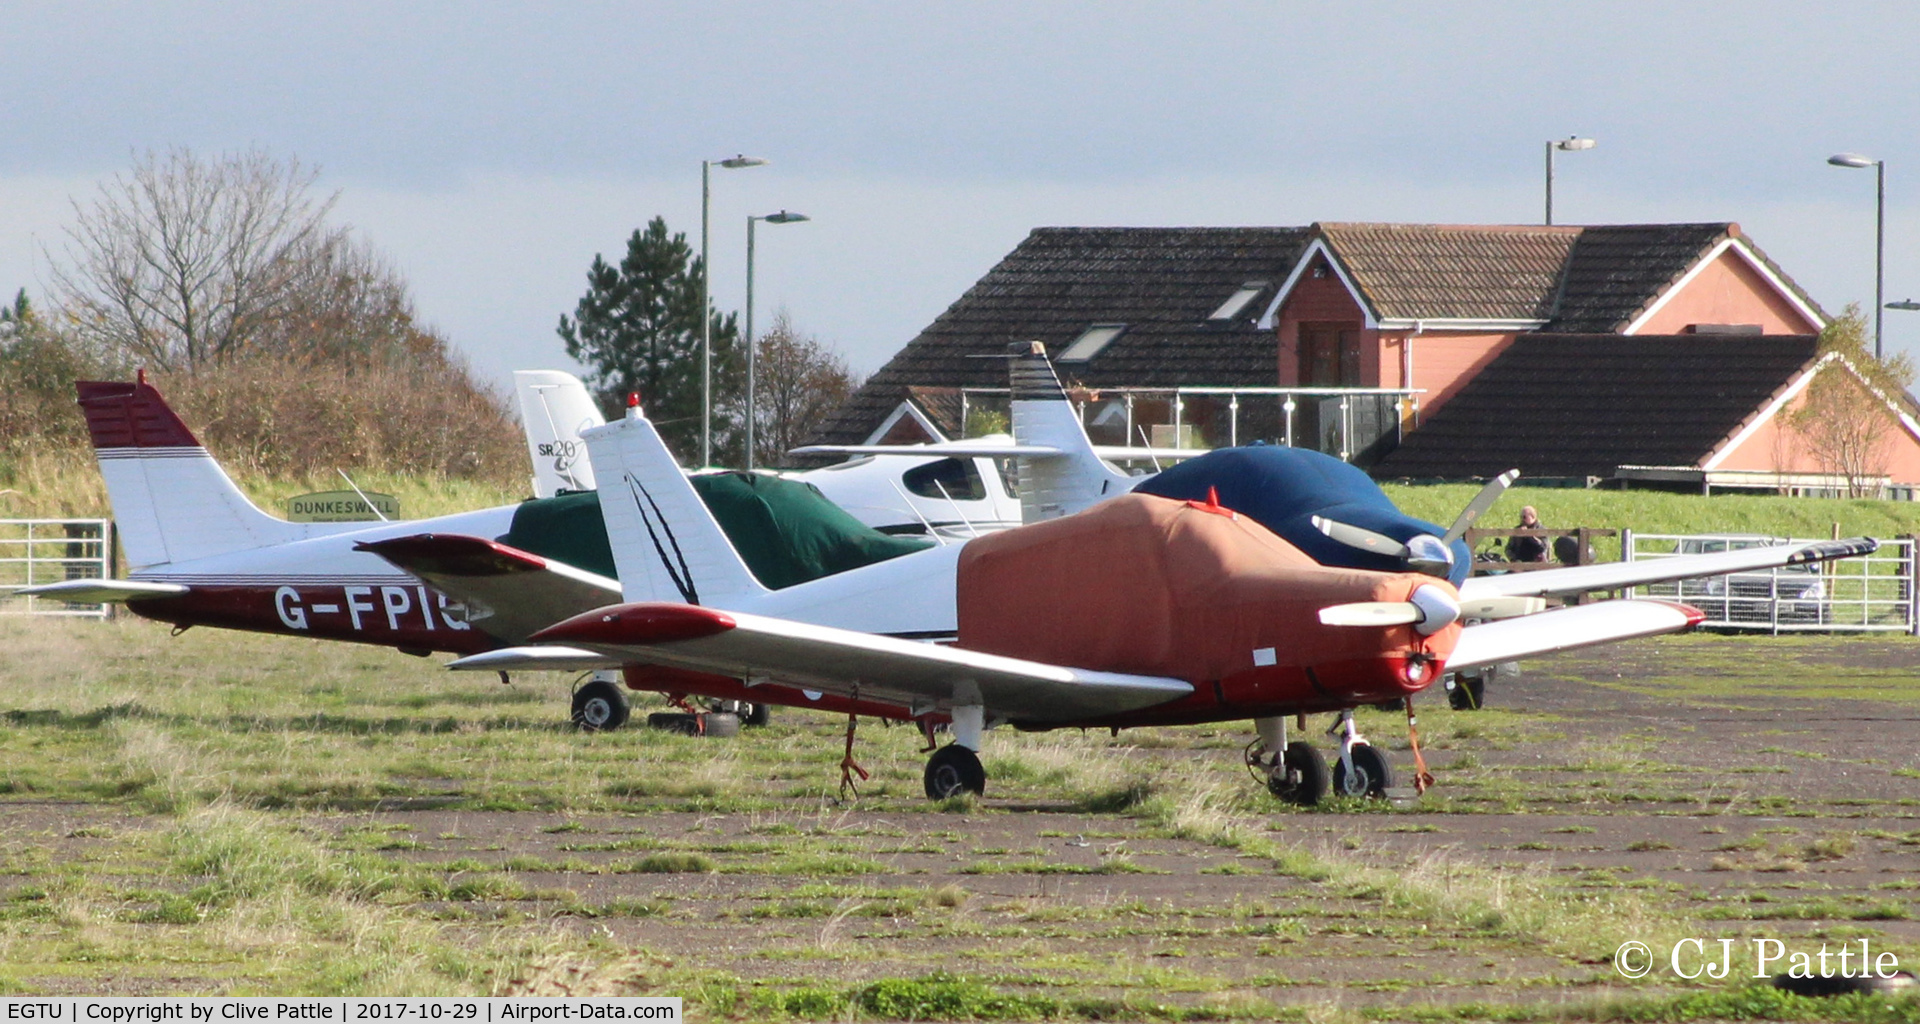 Dunkeswell Aerodrome Airport, Honiton, England United Kingdom (EGTU) - A gaggle of GA parked on a disused ww2 taxiway